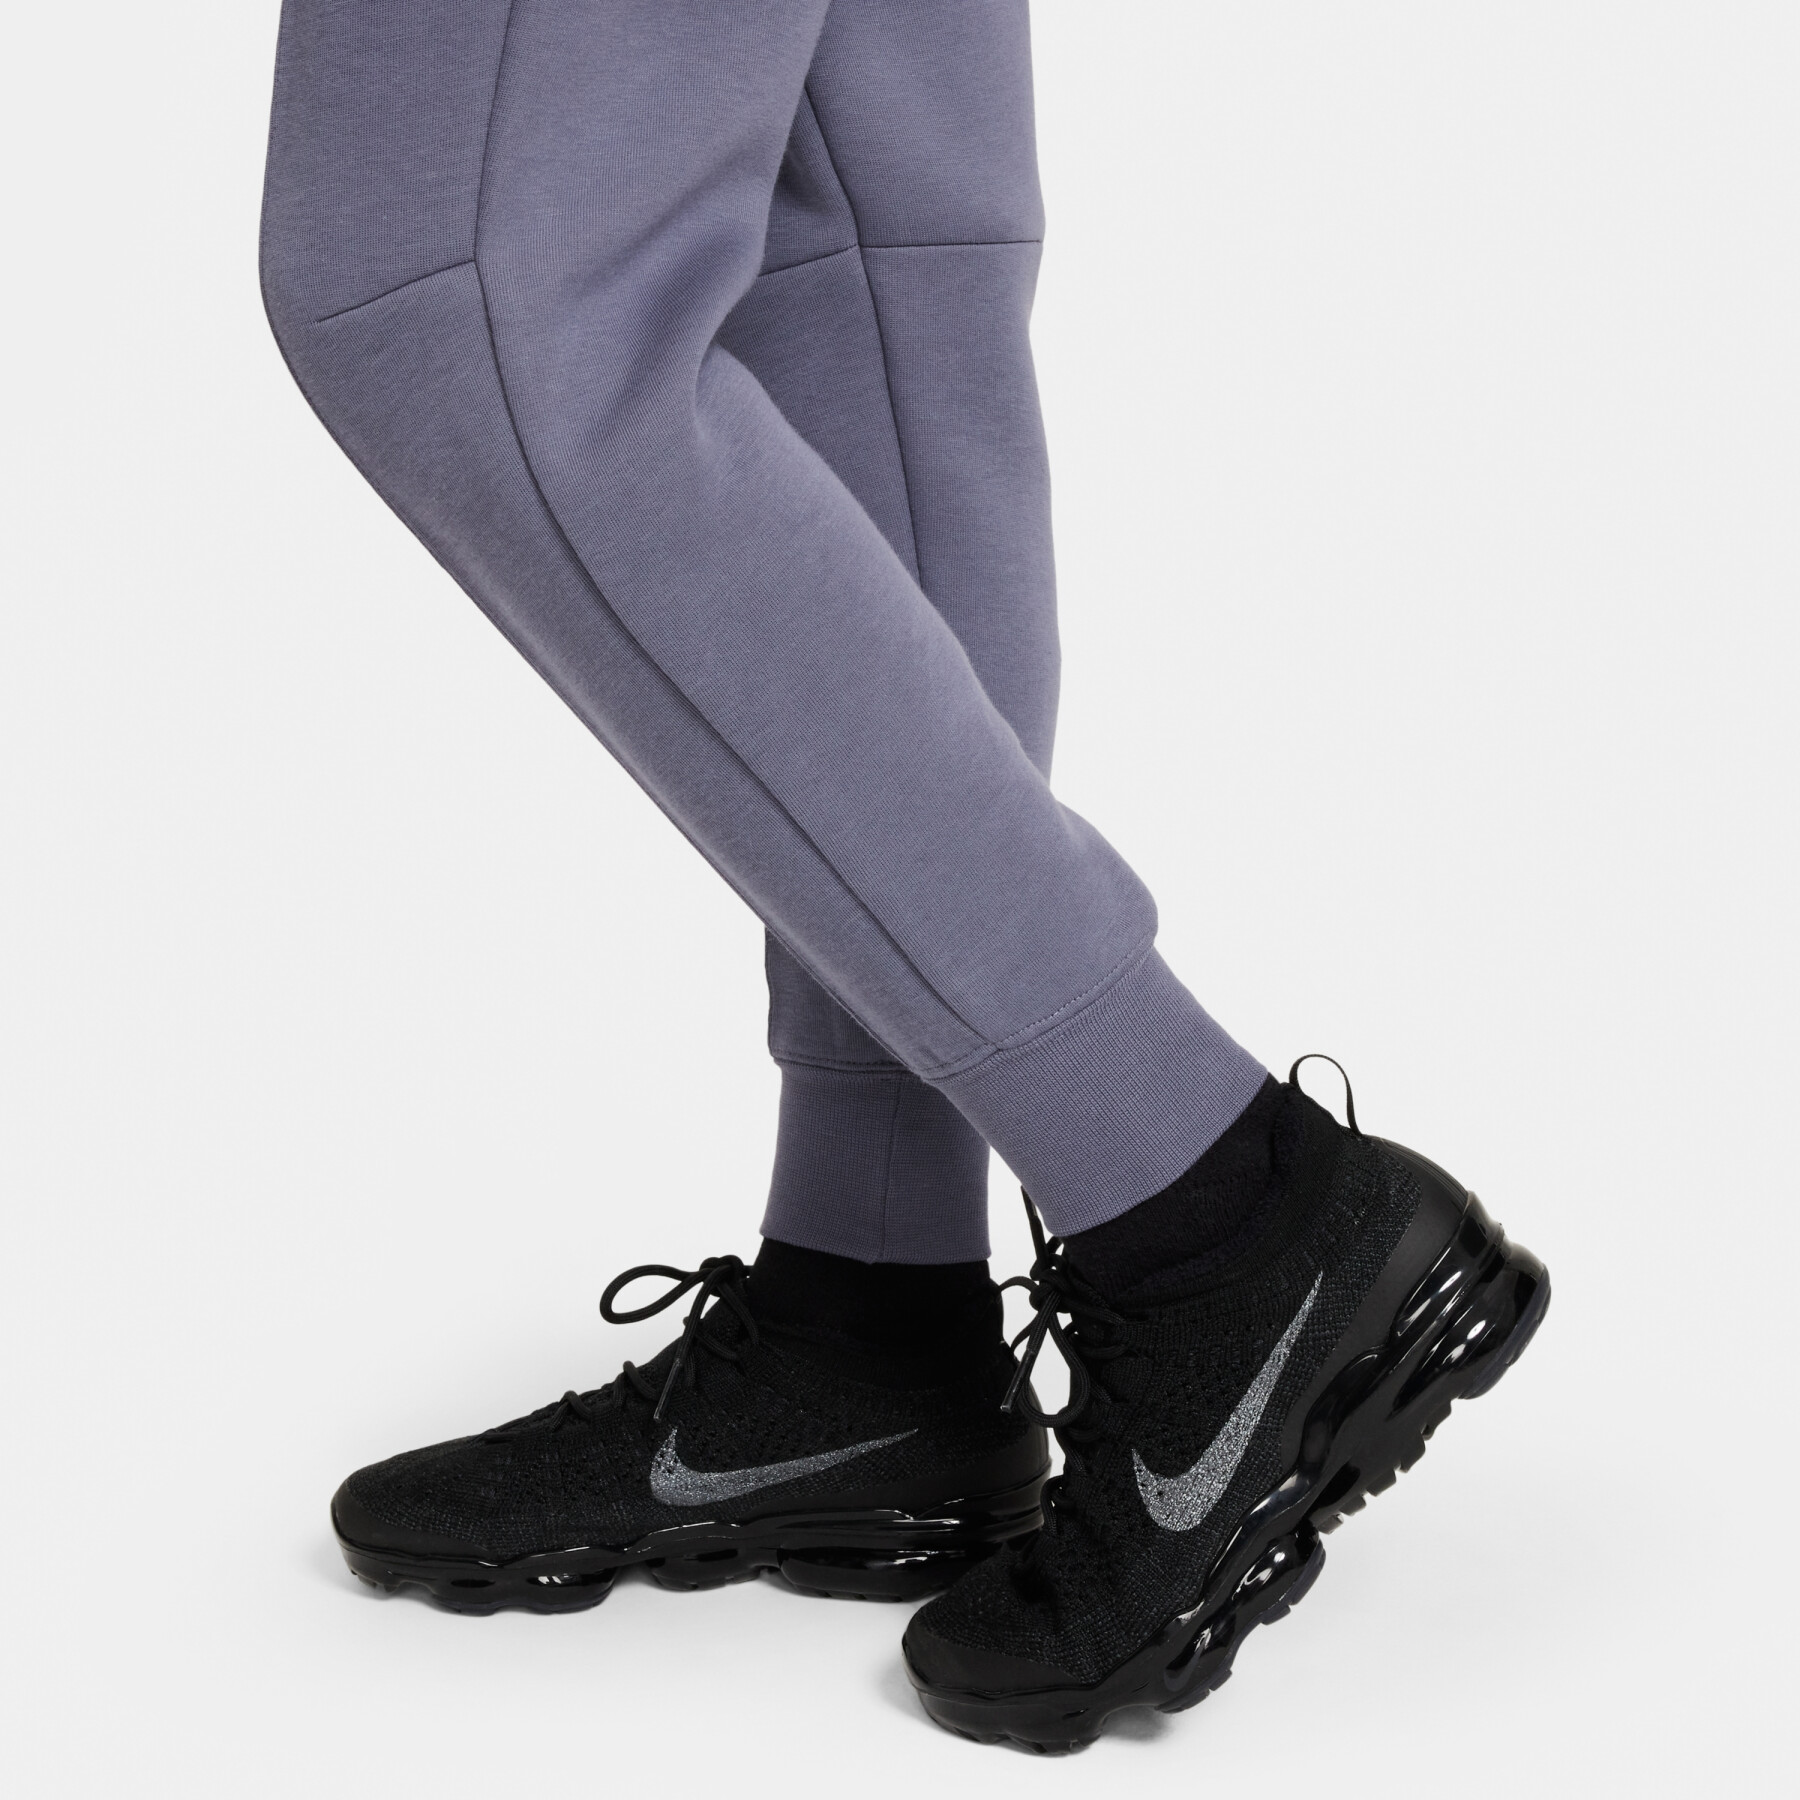 Pantalon de survêtement fille Nike Tech Fleece